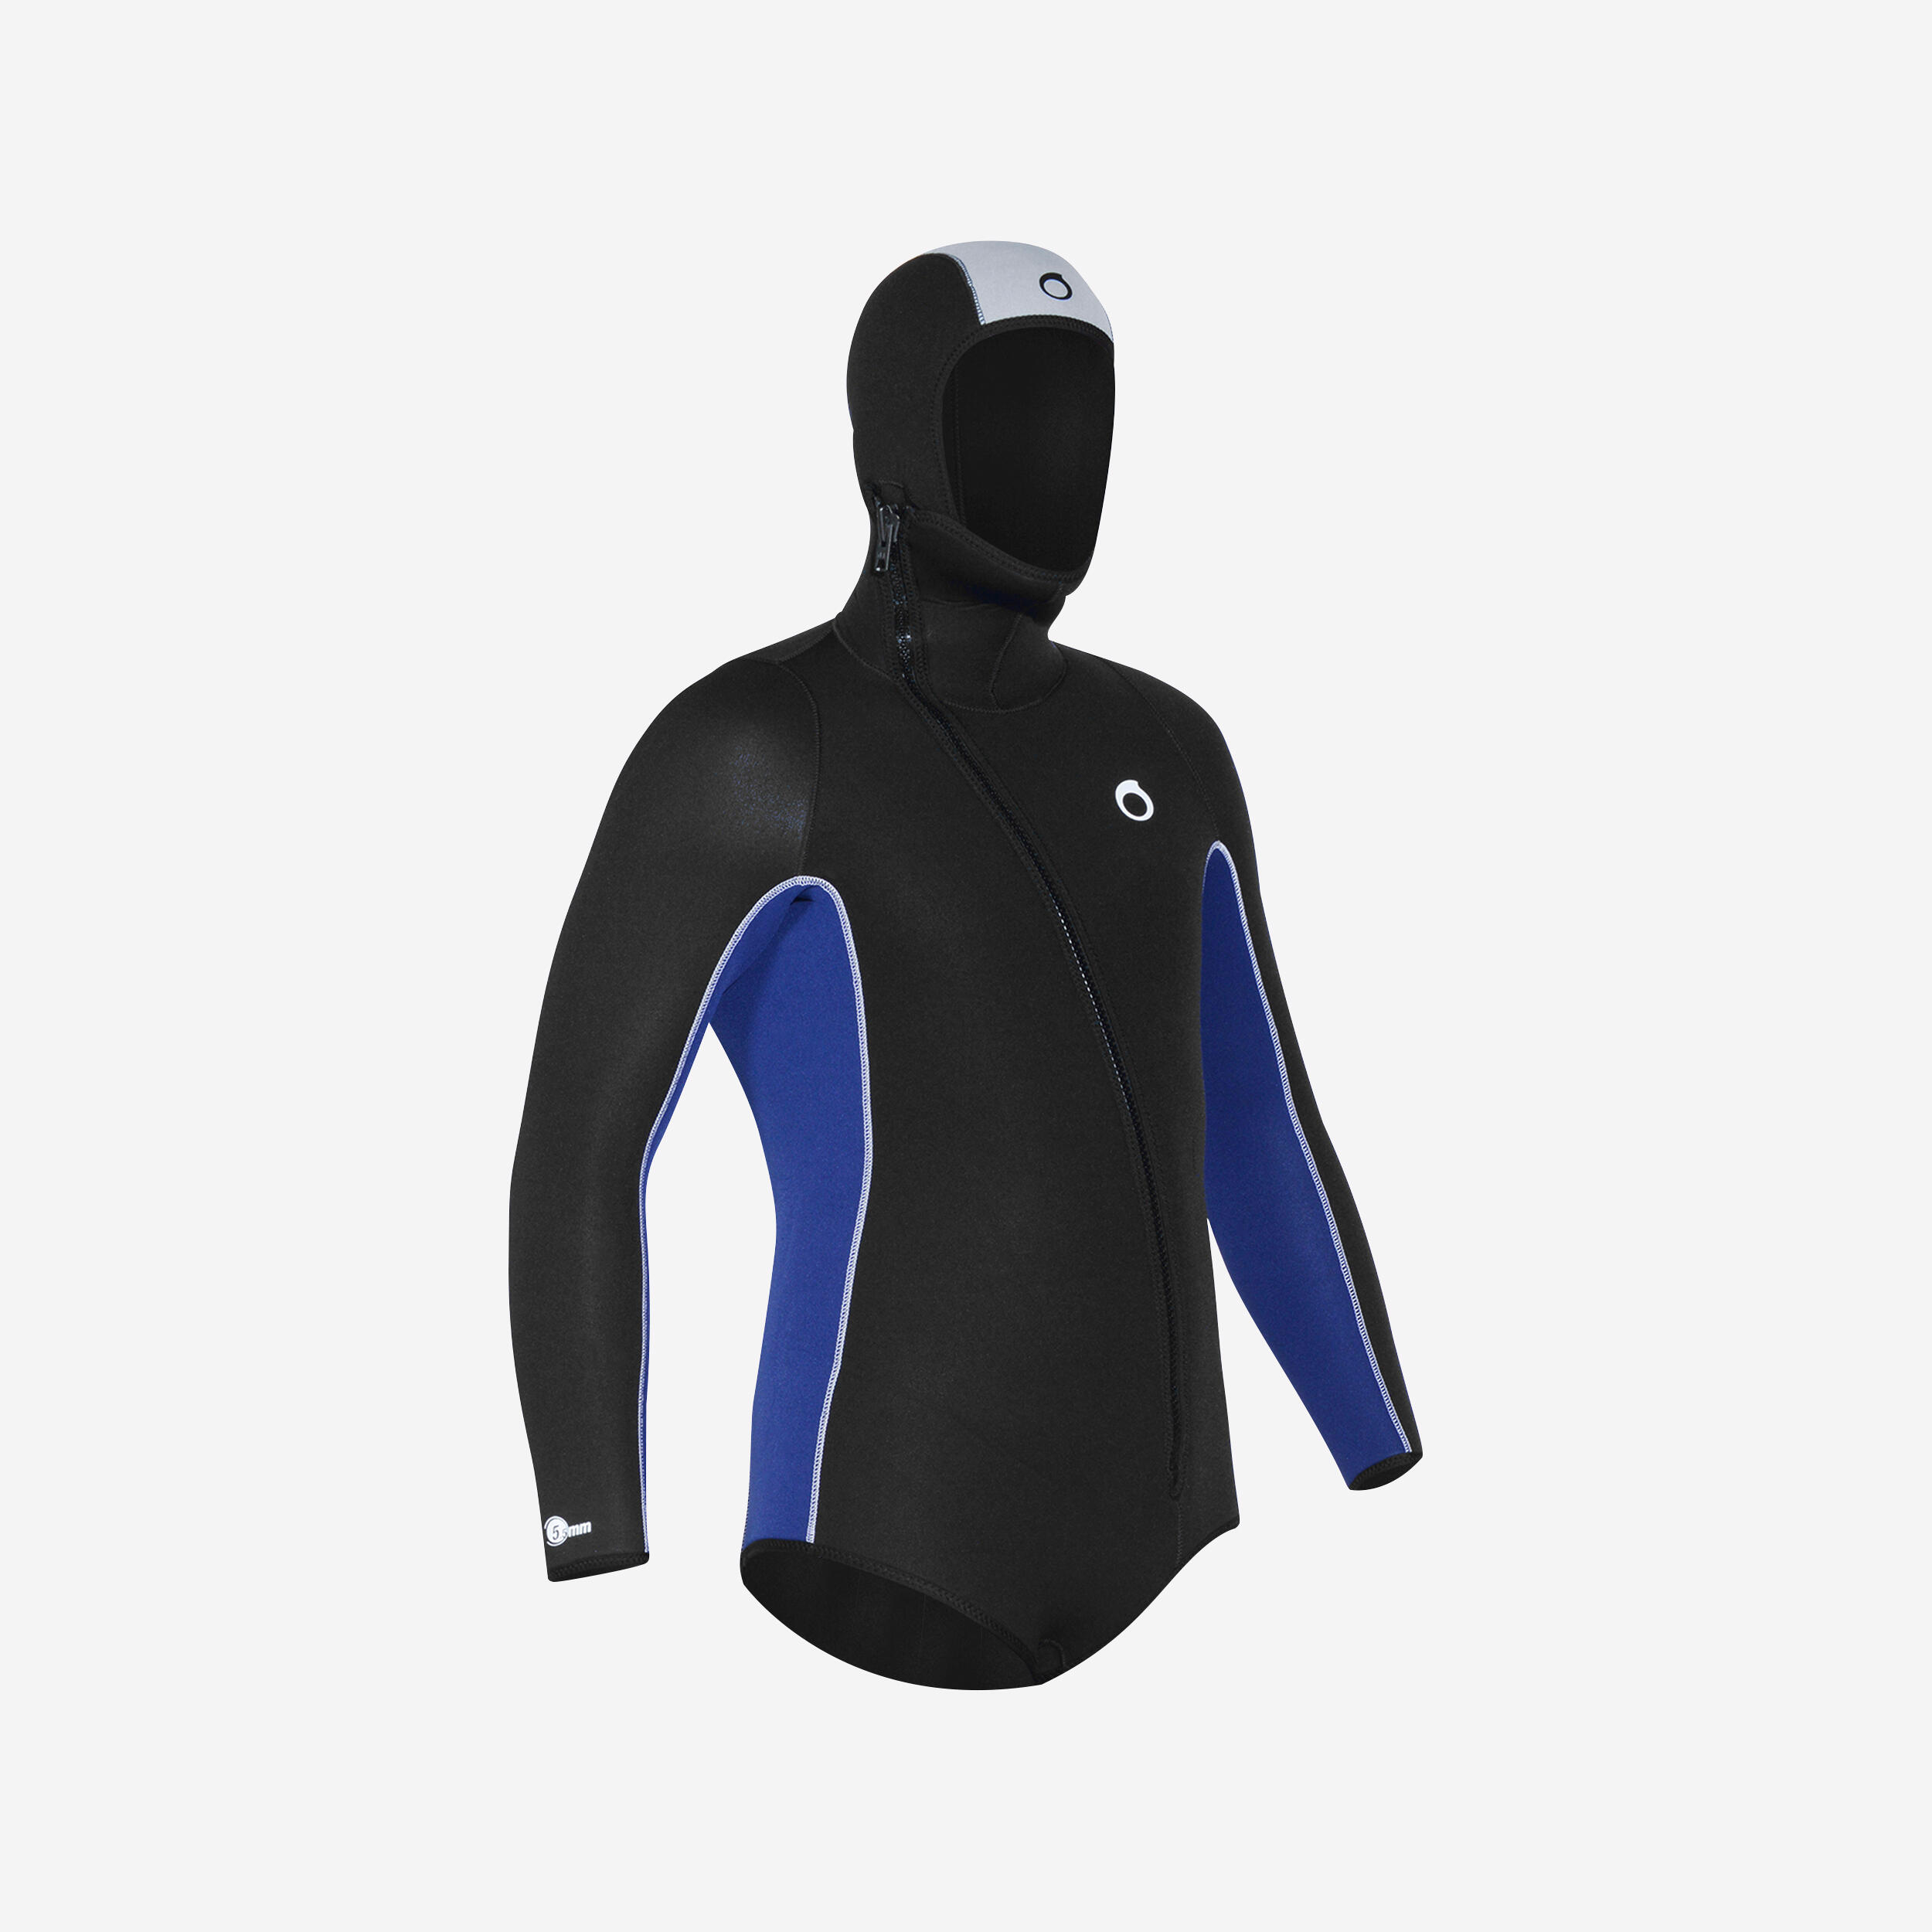 Men’s diving jacket with hood 5.5 mm neoprene SCD black and blue 1/10